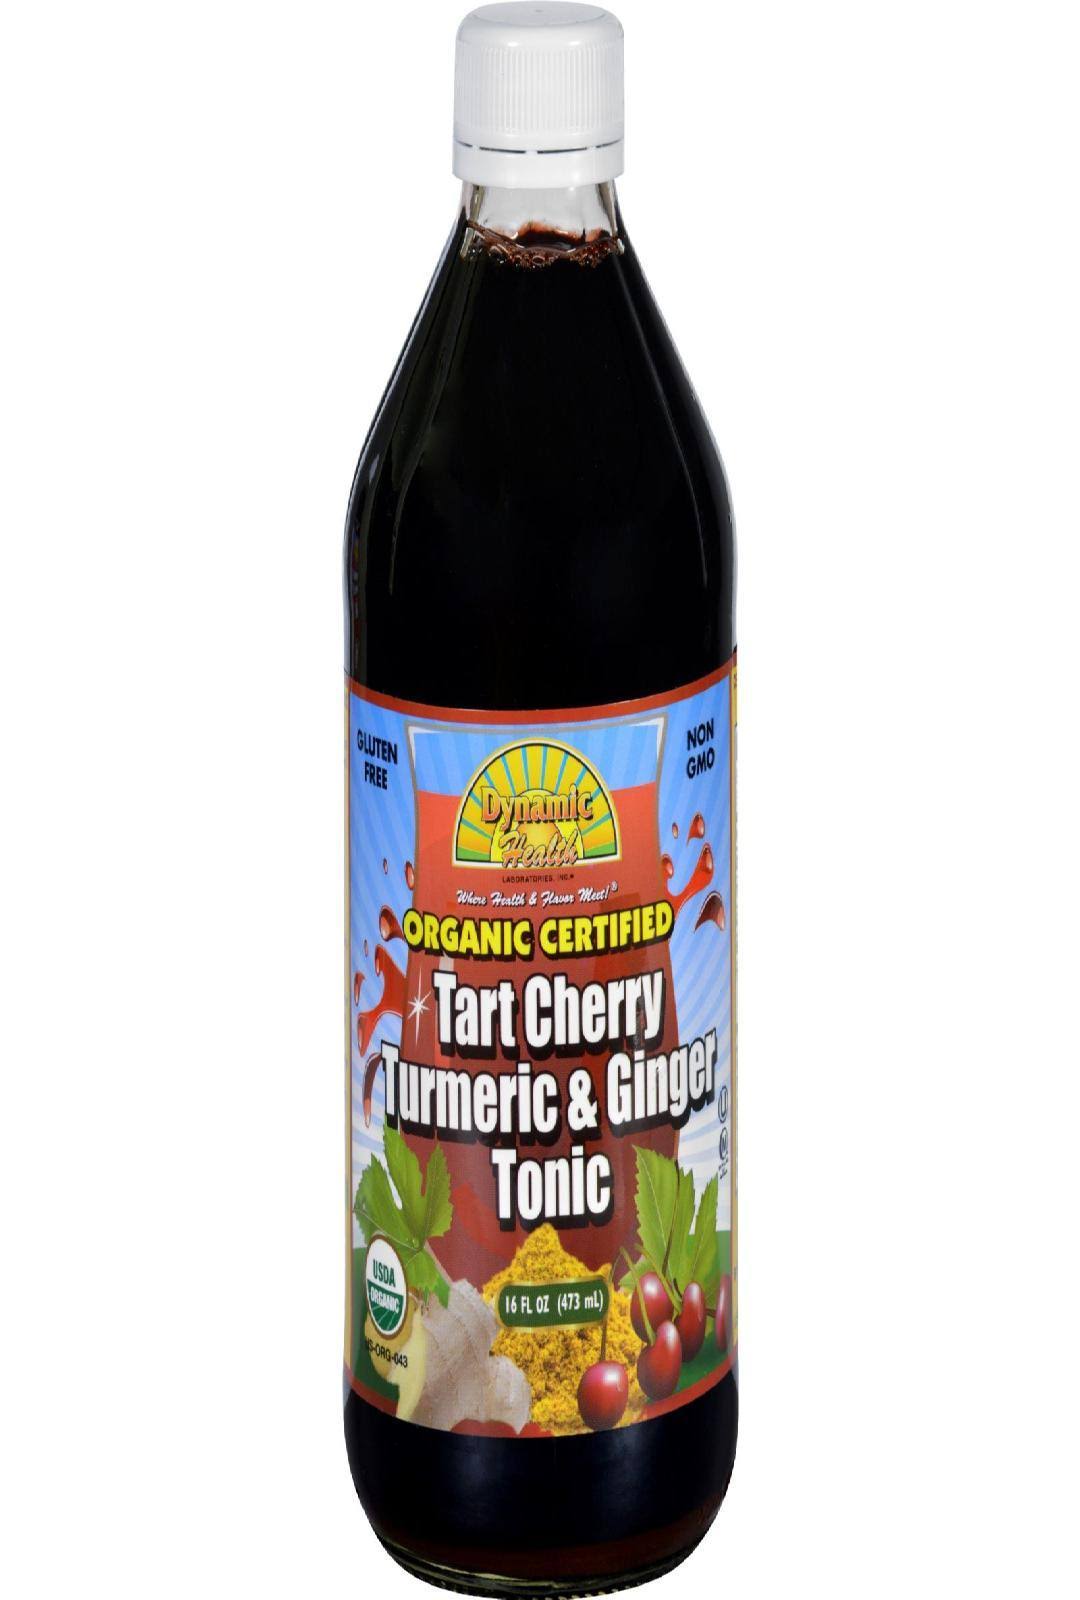 Dynamic Health Tonic - Tart Cherry Turmeric And Ginger